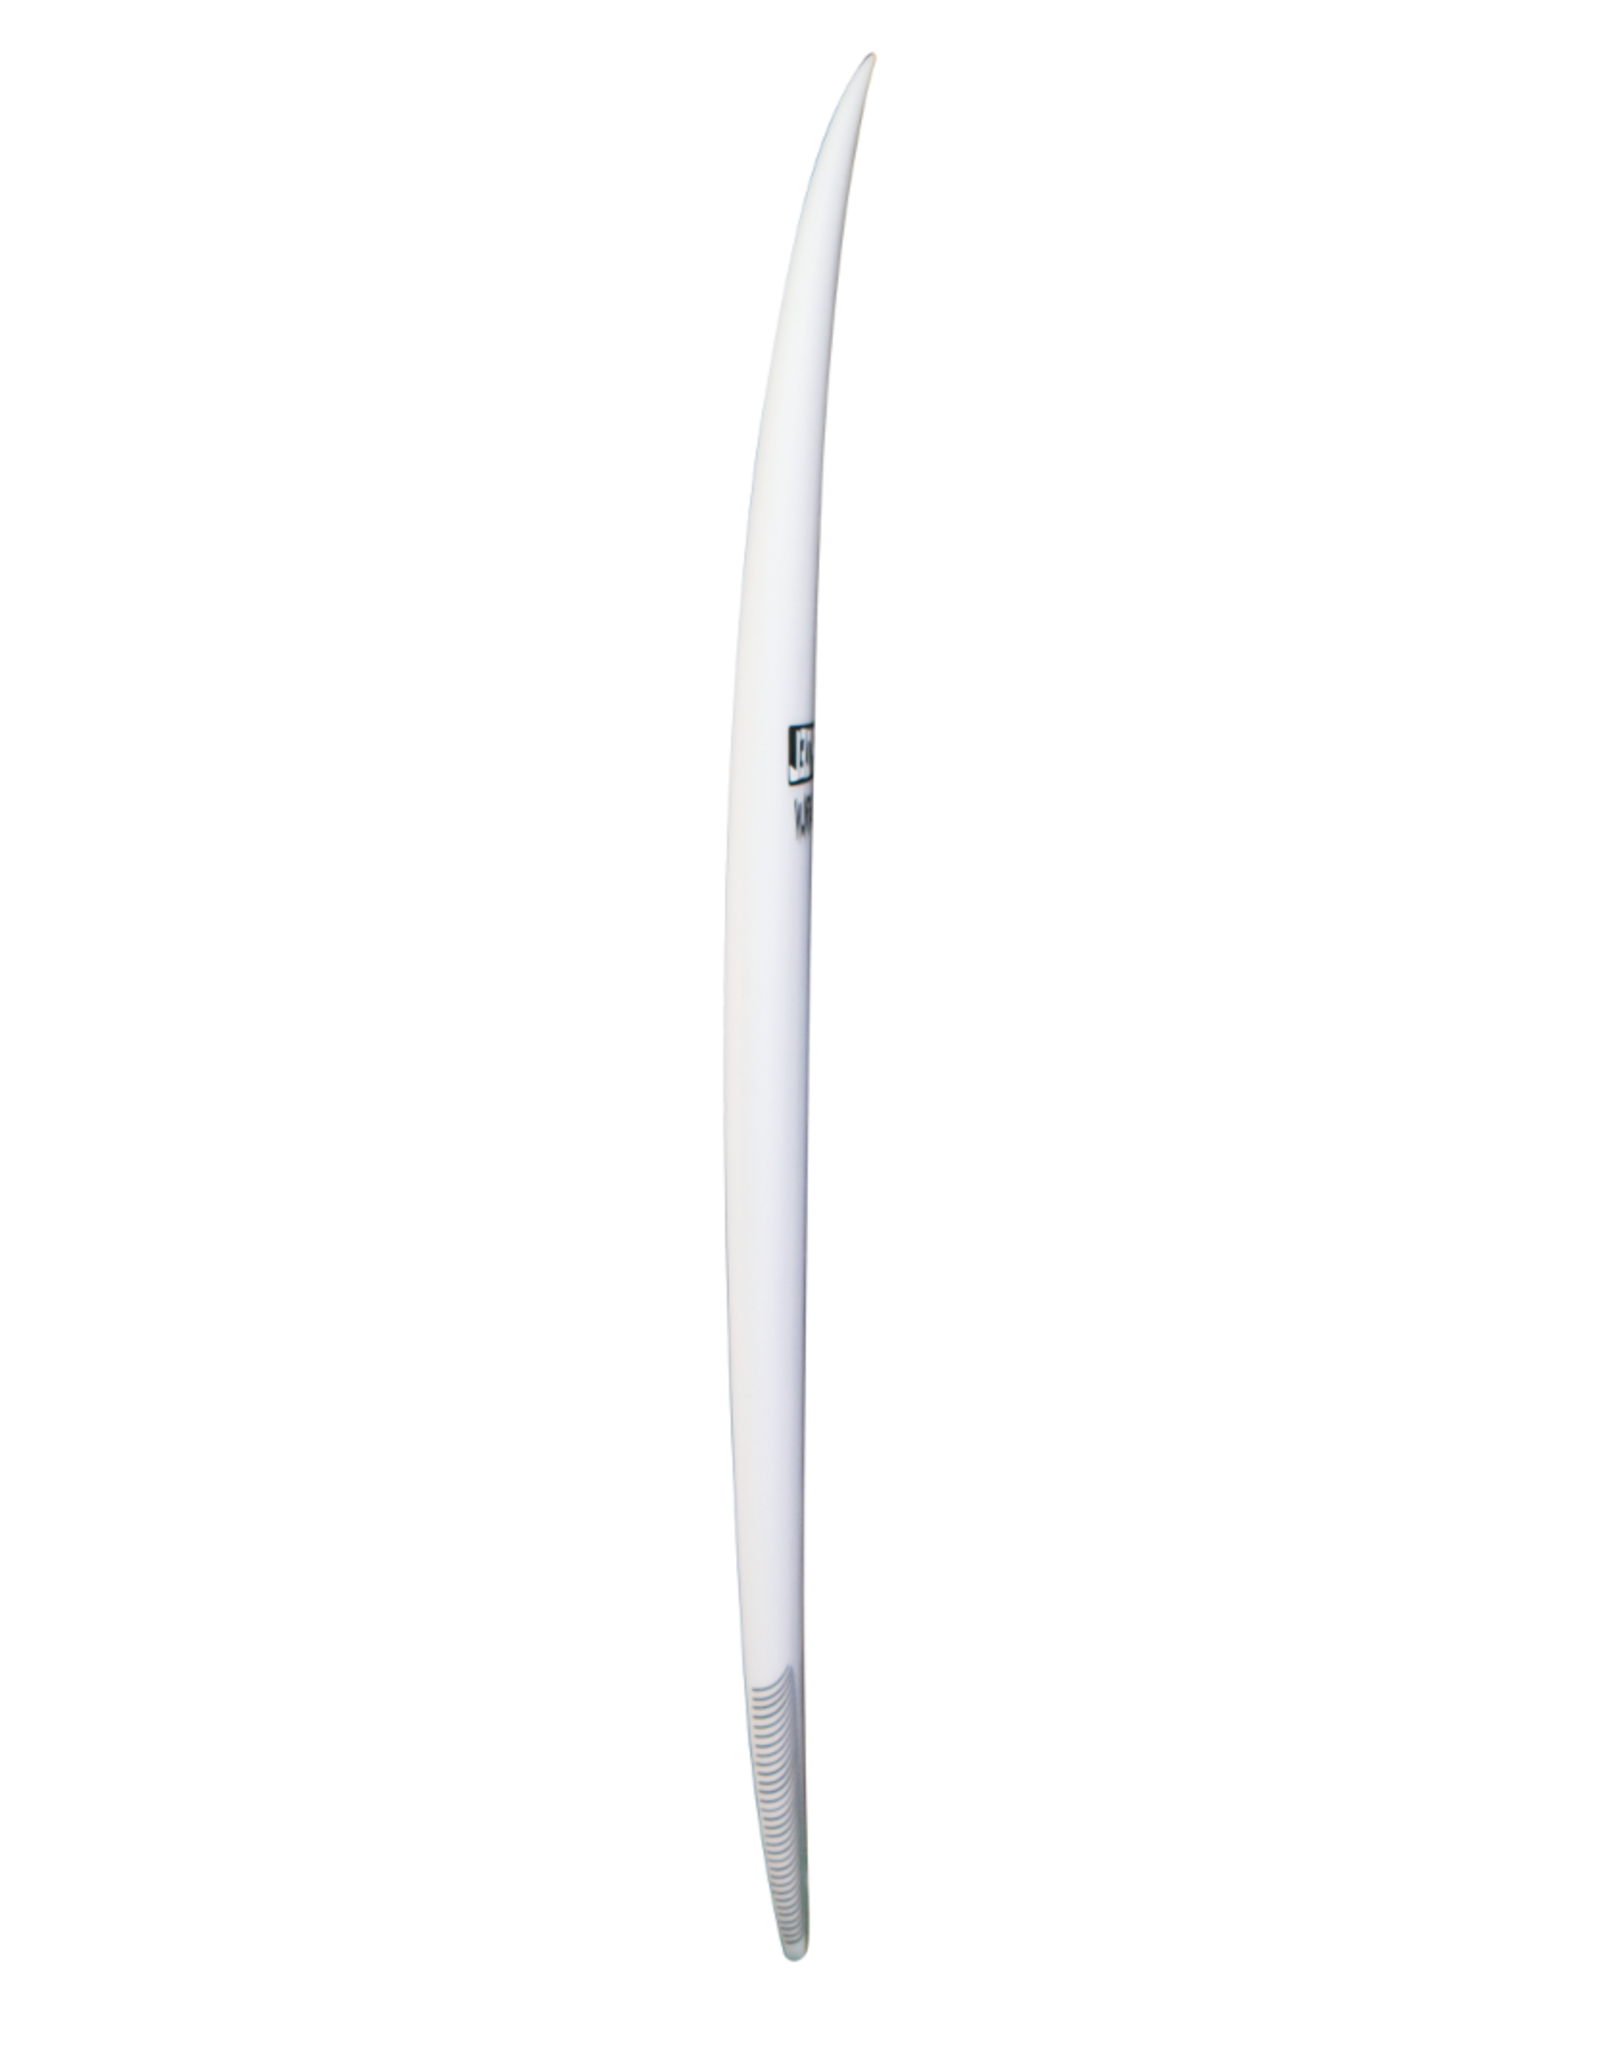 Pyzel Surfboards Pyzel 5'2" Gremlin PU Futures 5 Fins